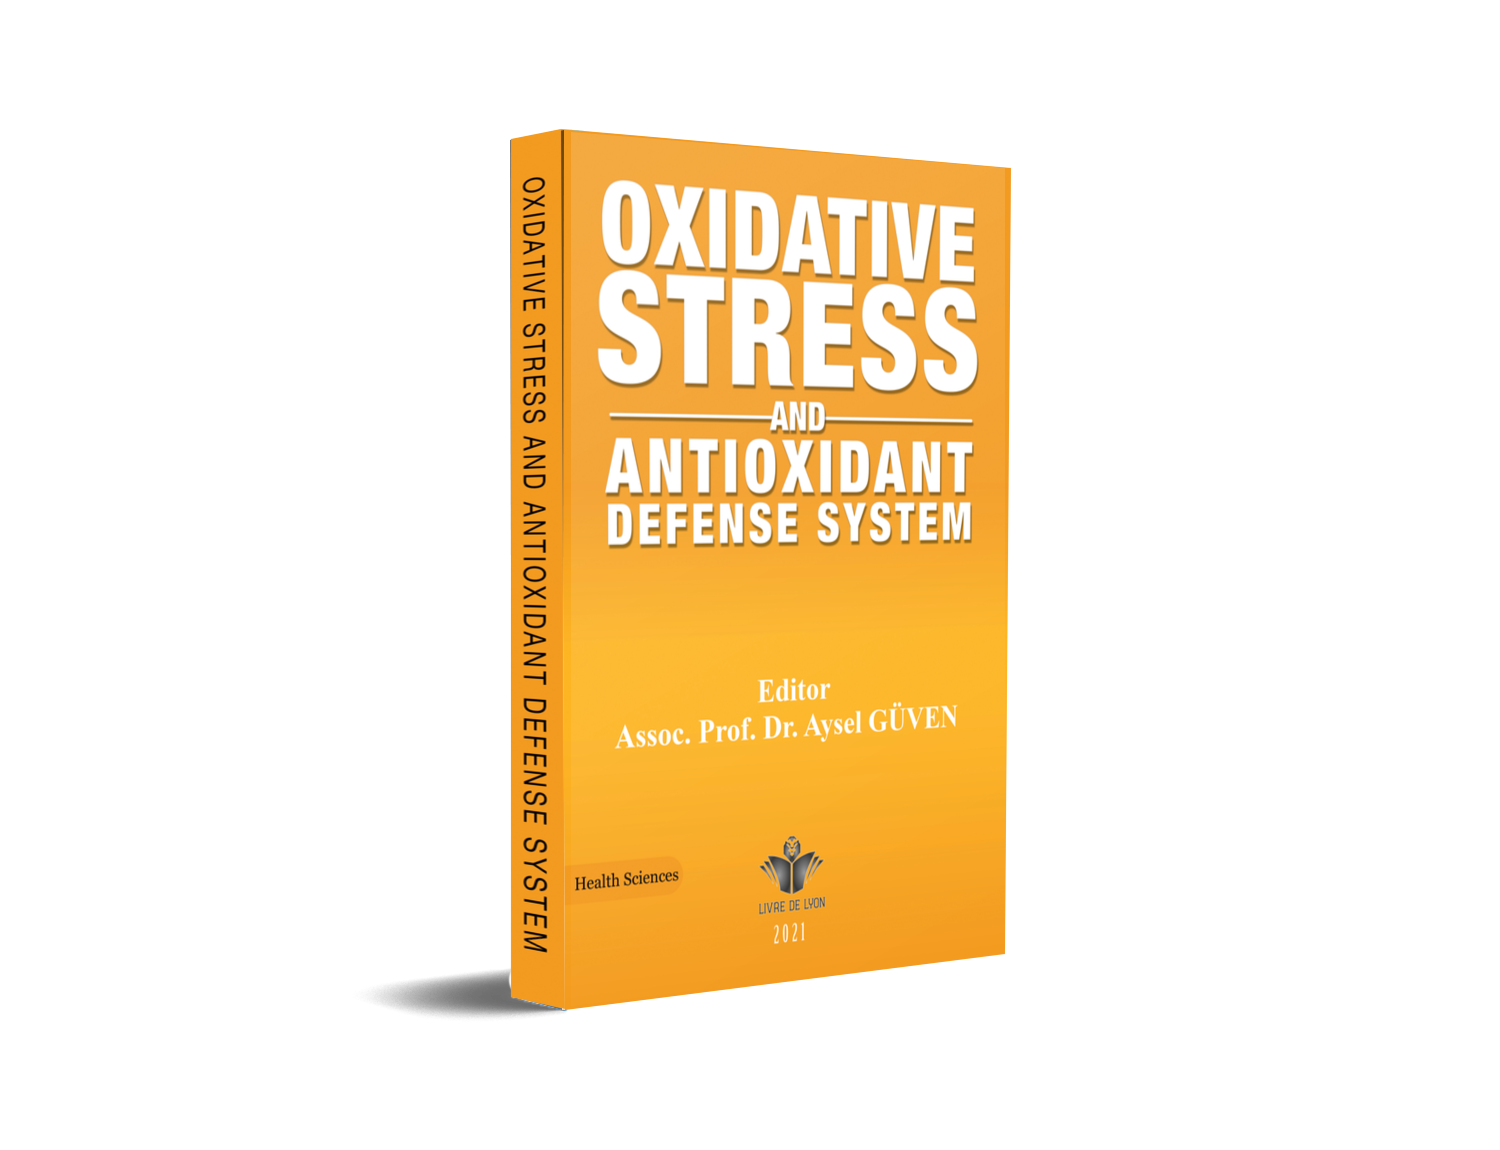 Oxidative Stress and Antioxidant Defense System